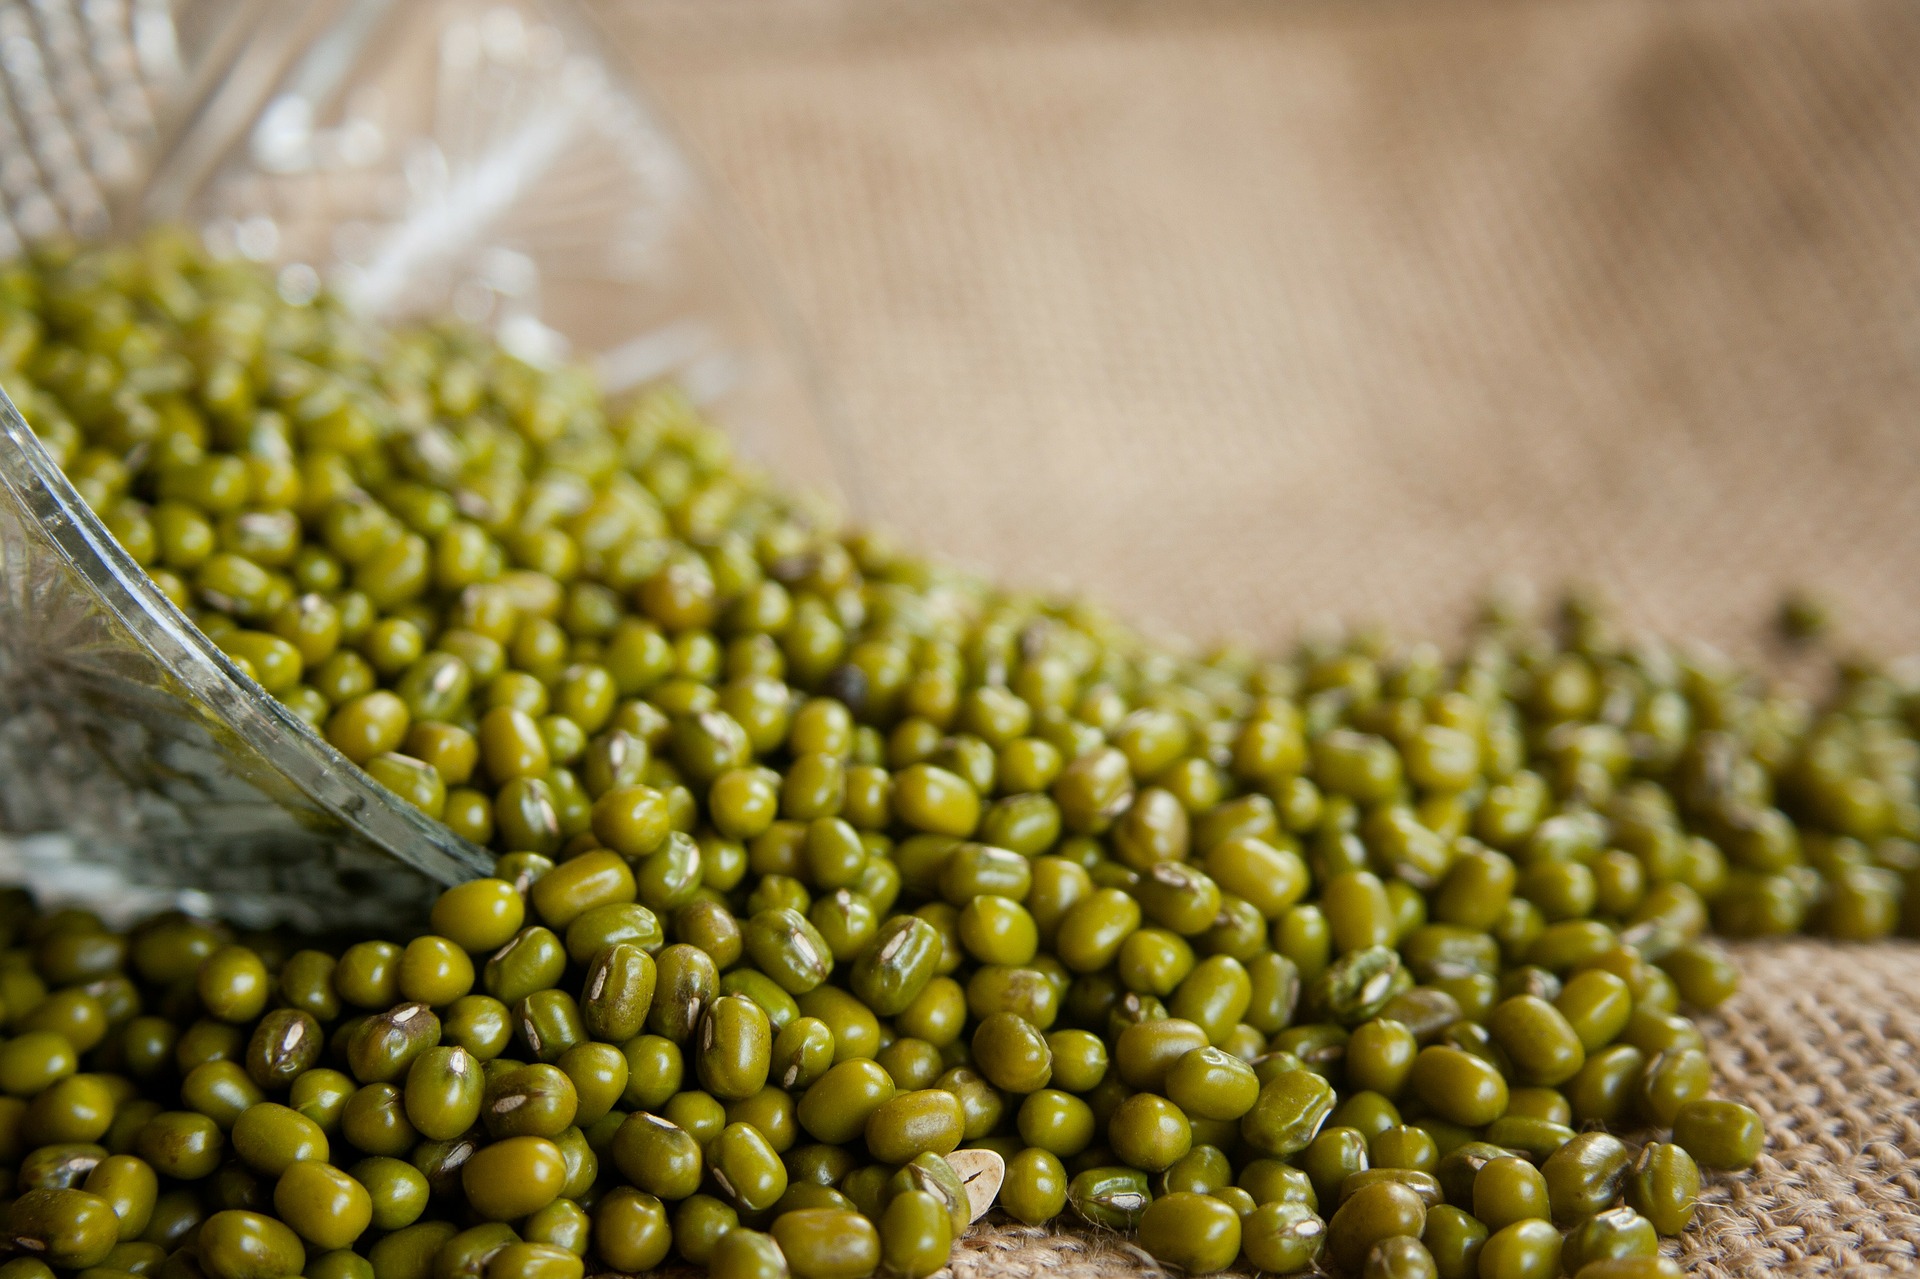 Health benefits of mung beans